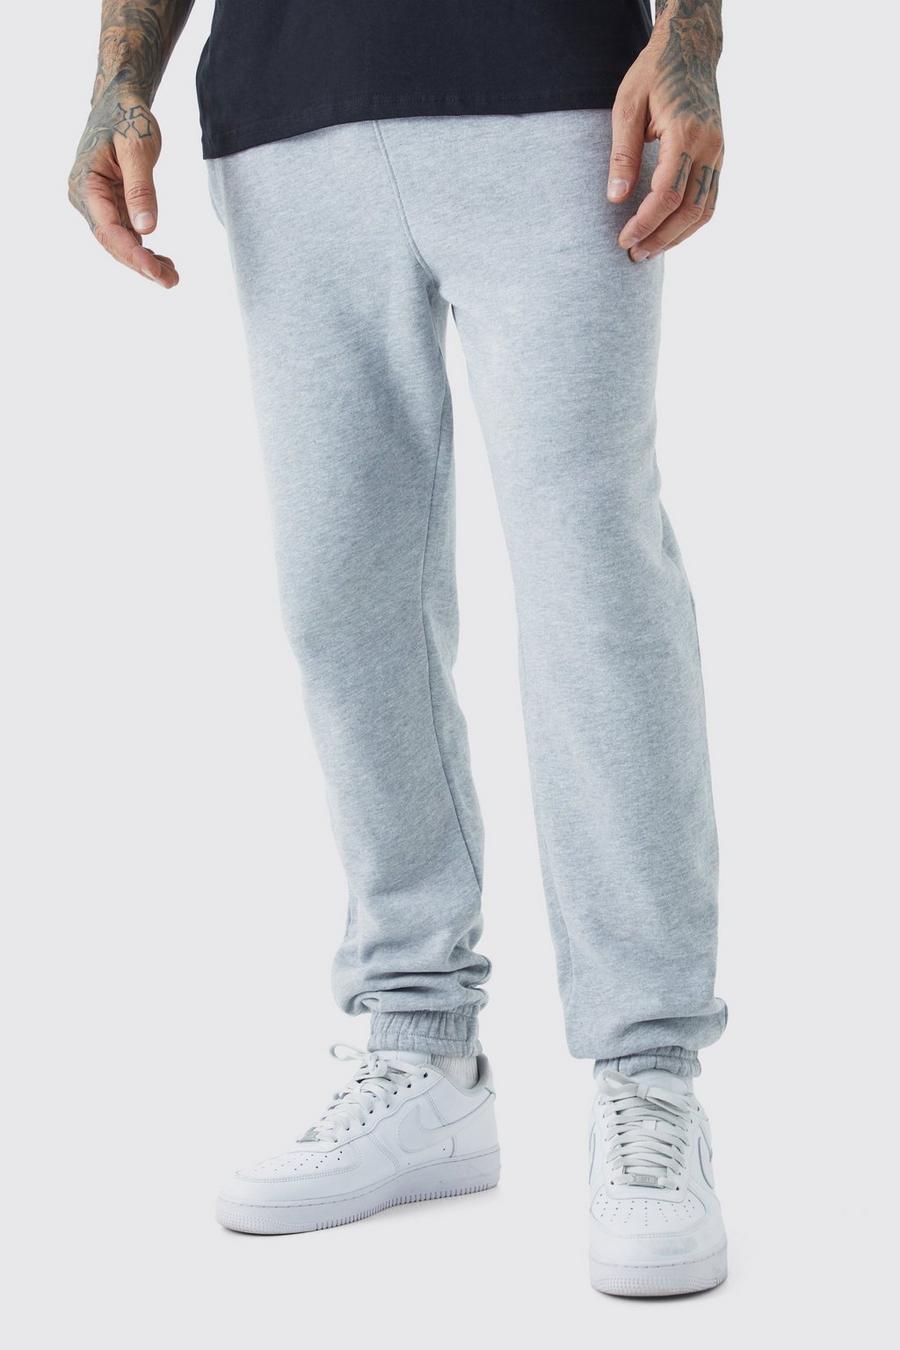 Pantaloni tuta Tall Basic Core Fit, Grey marl